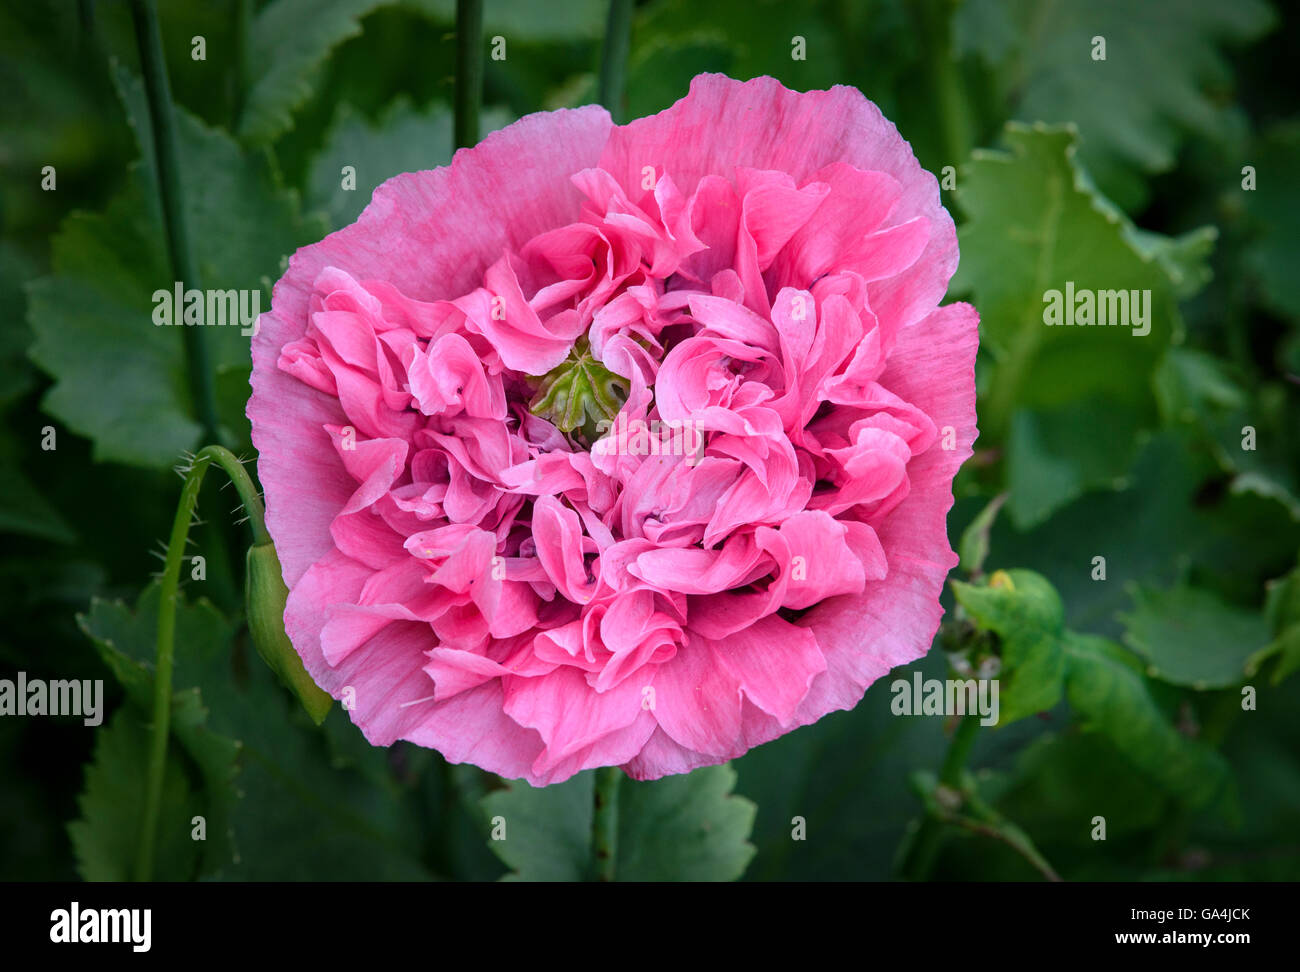 Amapola rosada fotografías e imágenes de alta resolución - Alamy